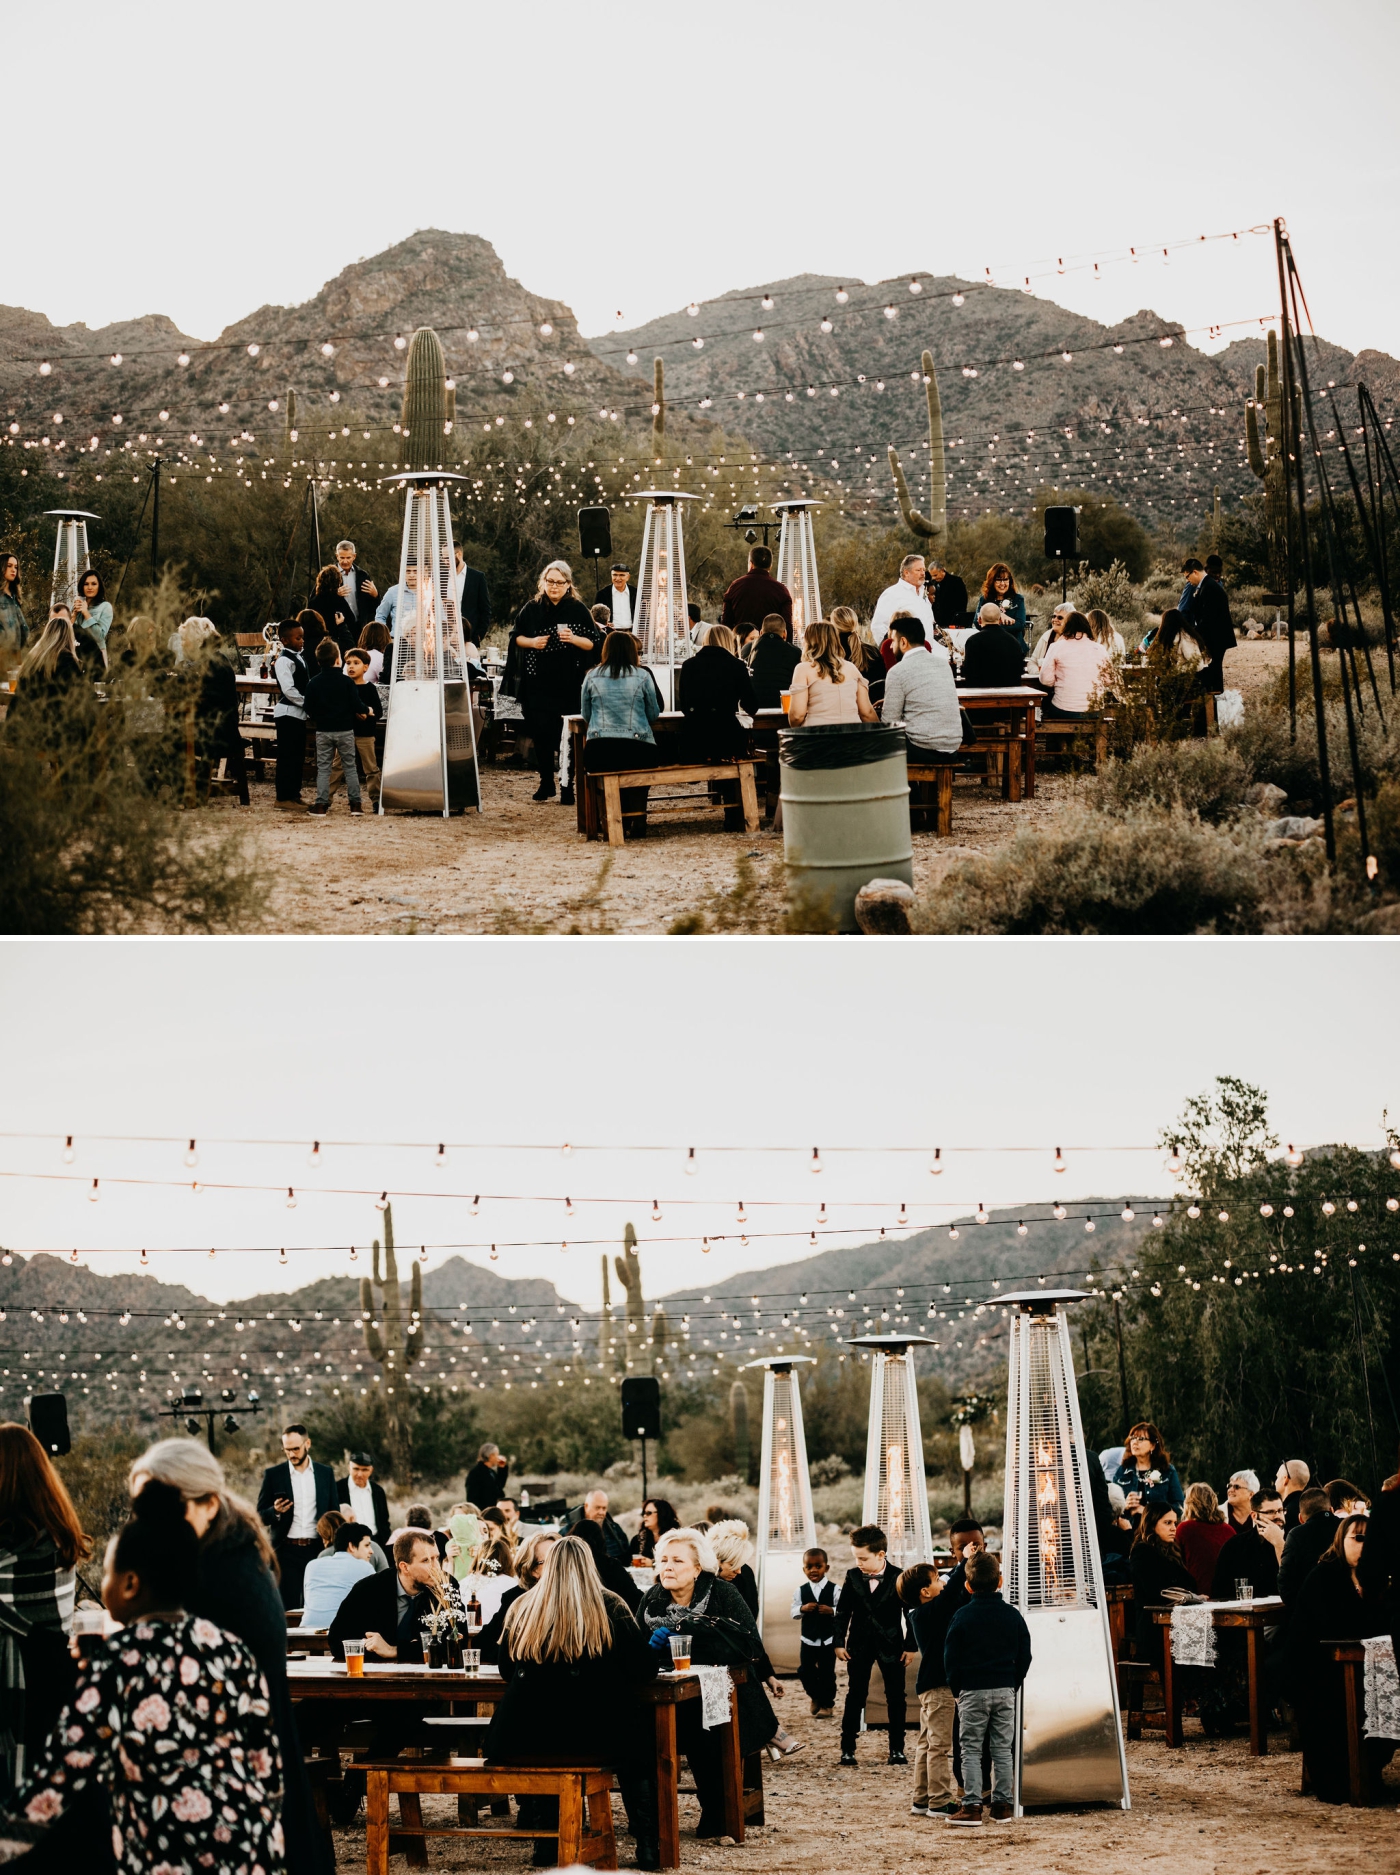 Tips on designing an Arizona desert wedding